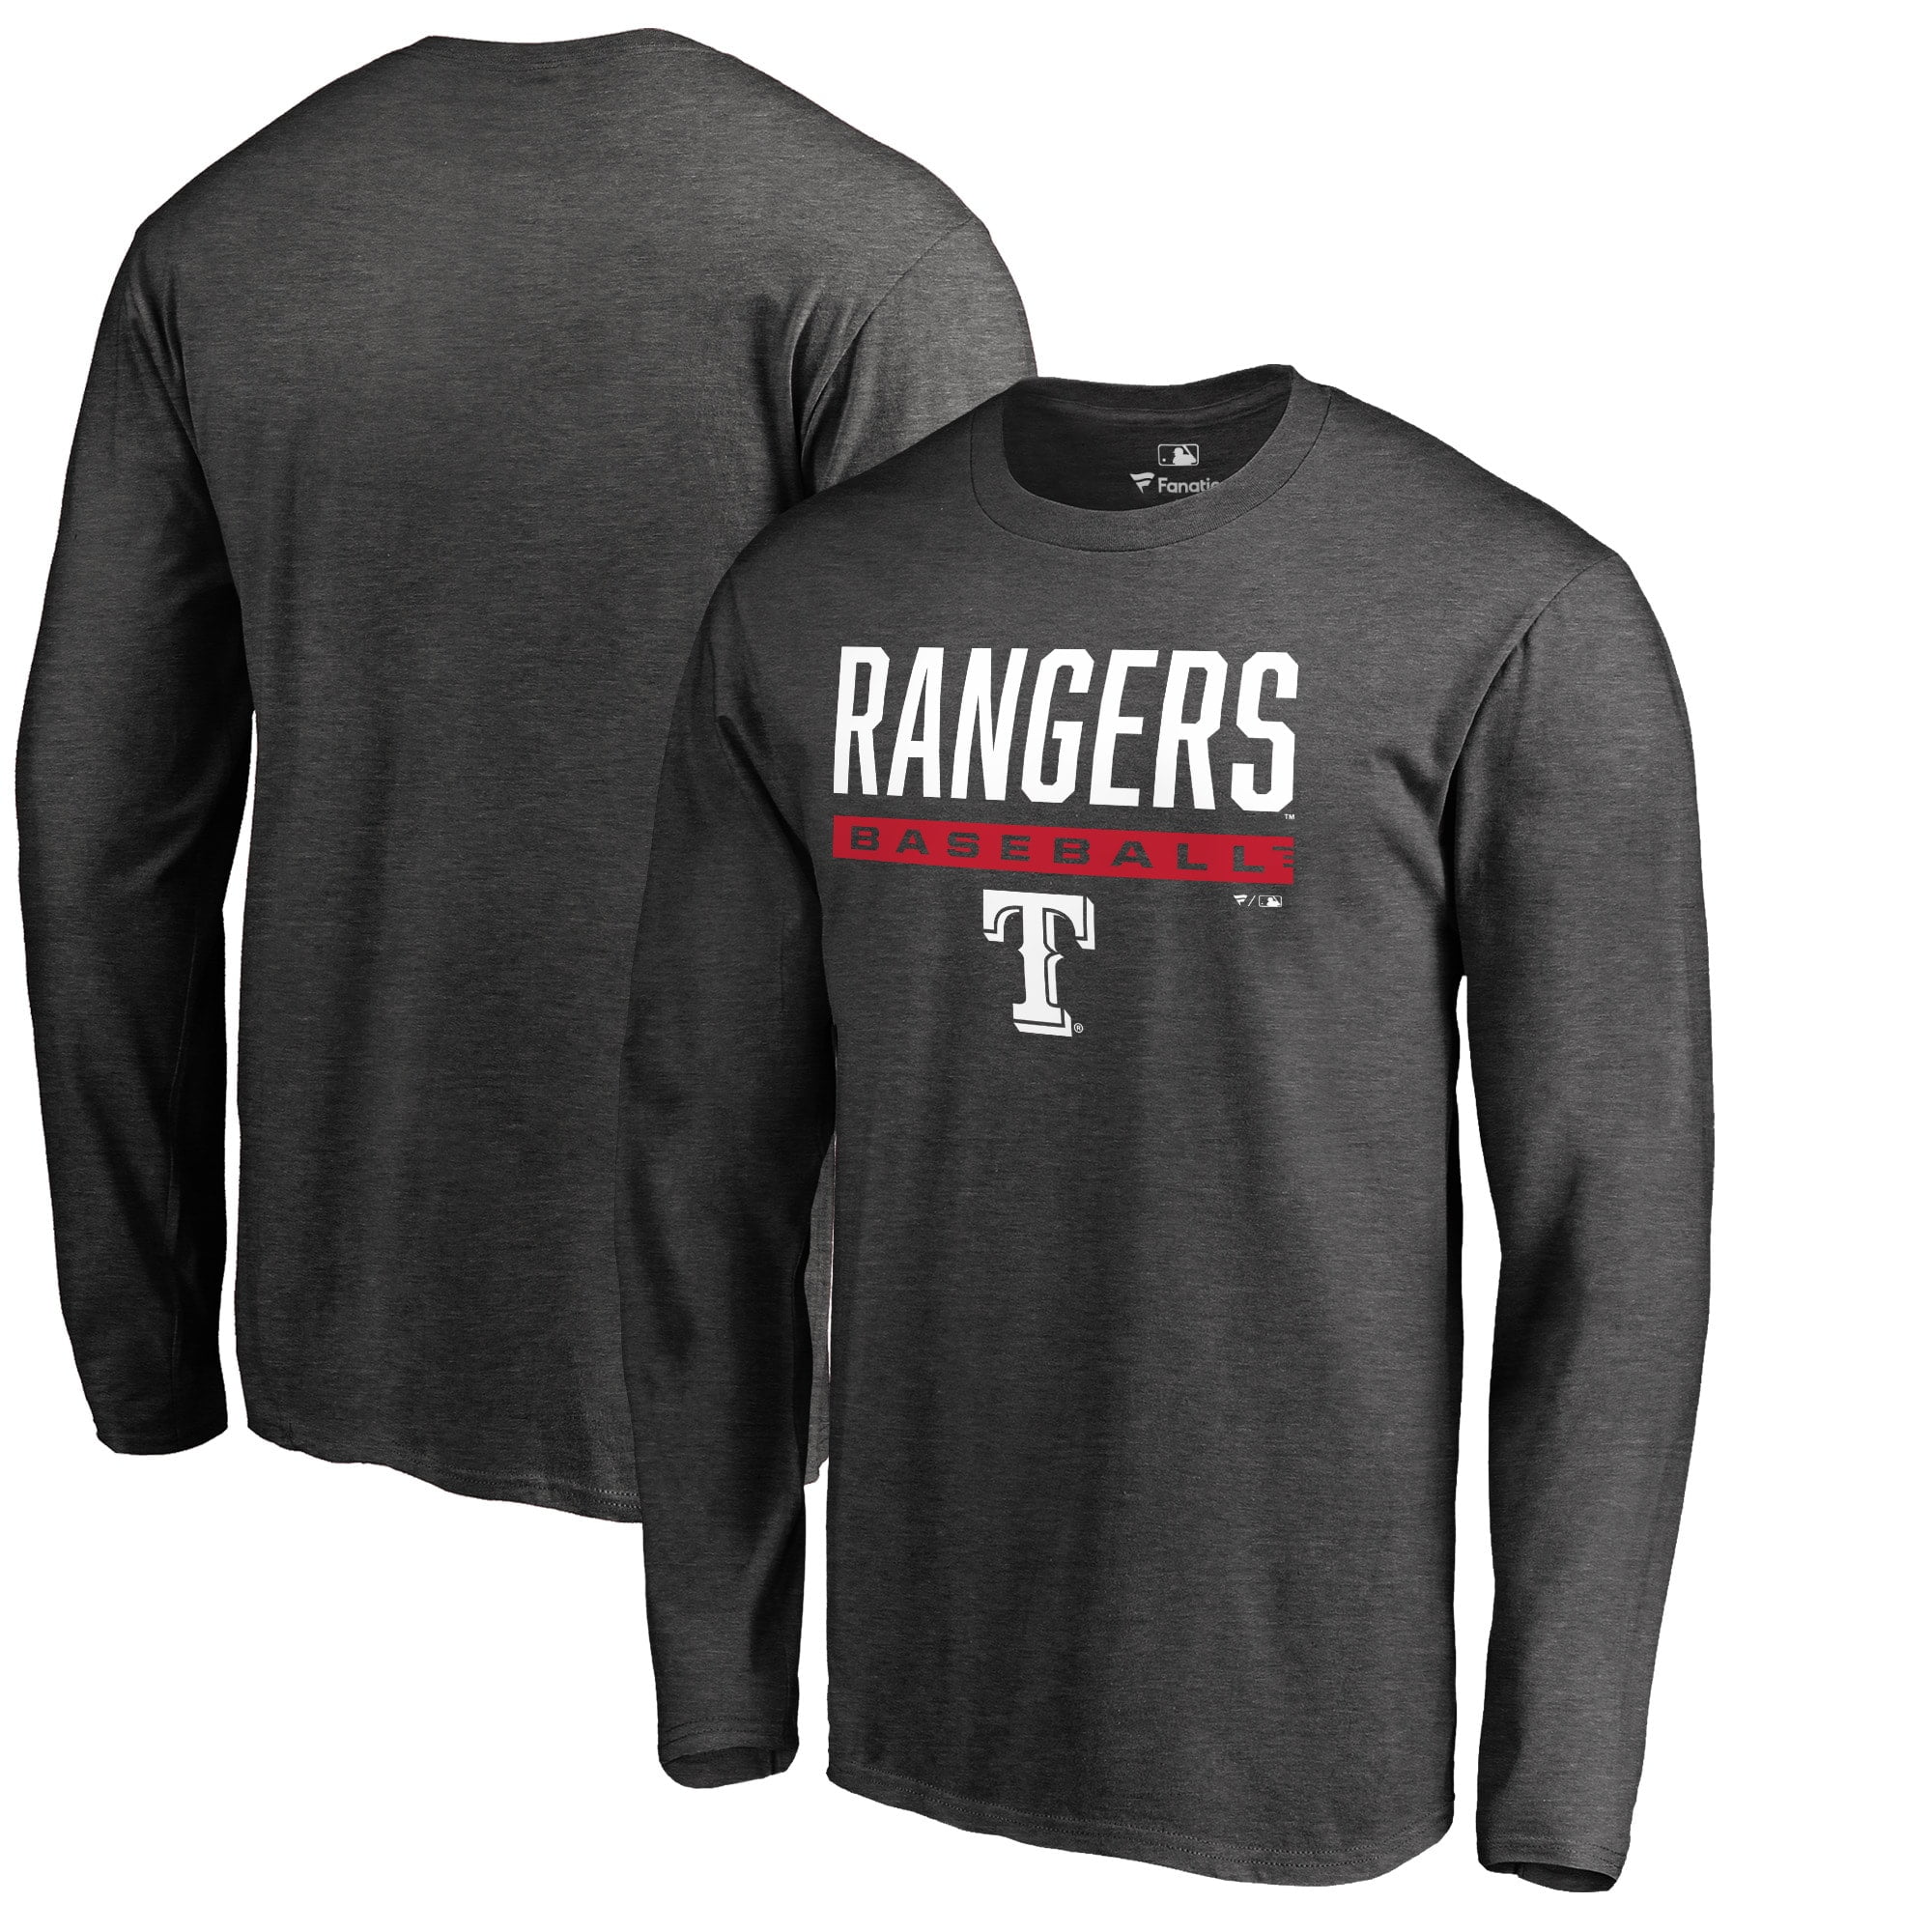 texas rangers championship shirt